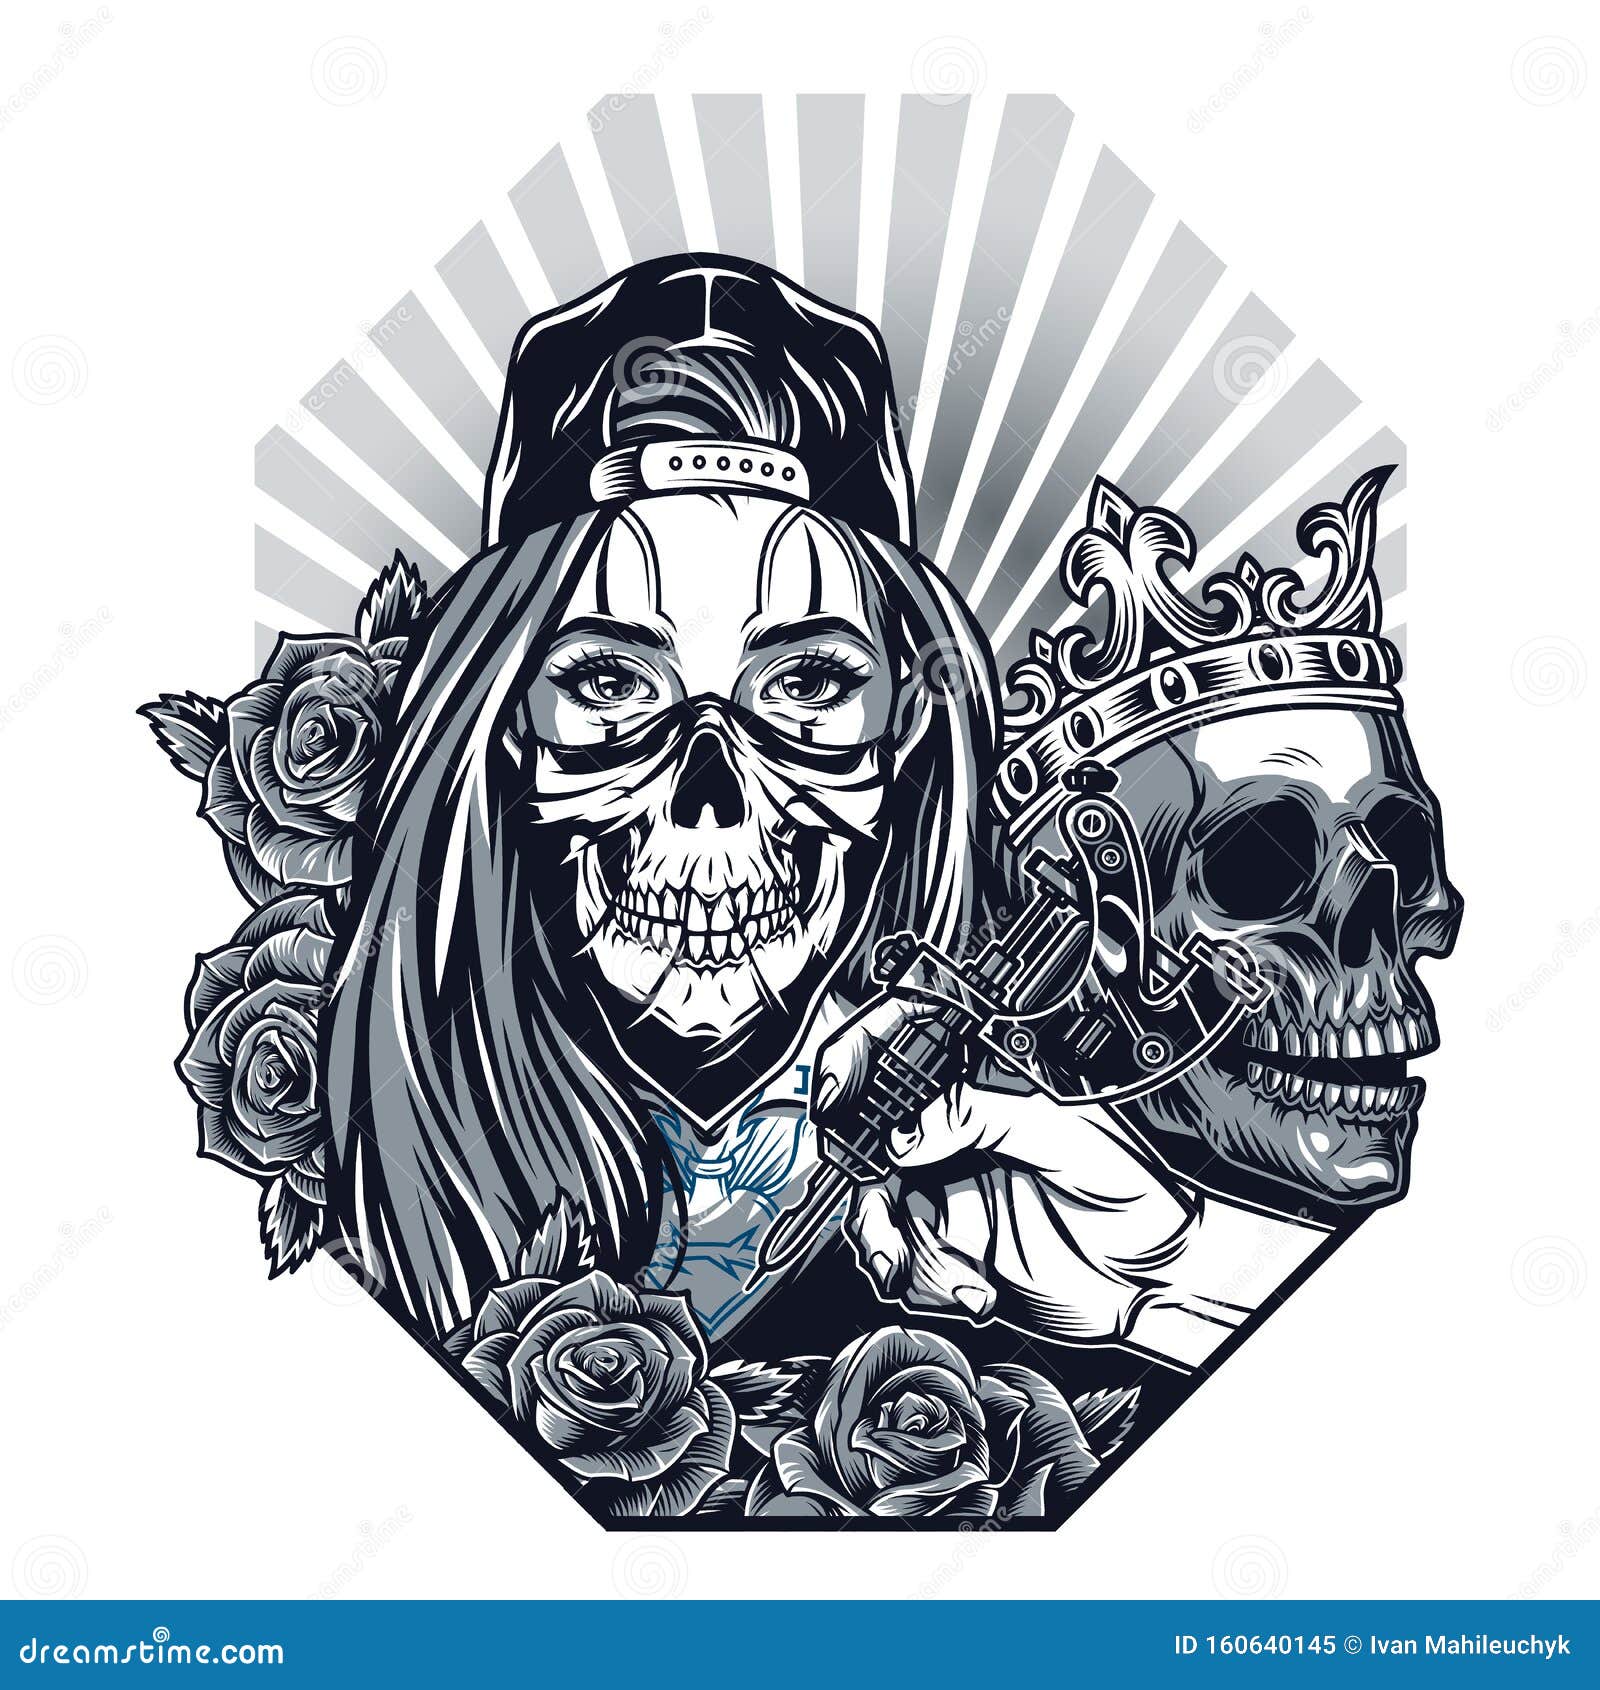 40 Hardcore and Creative Head Tattoo Ideas 2022 Designs